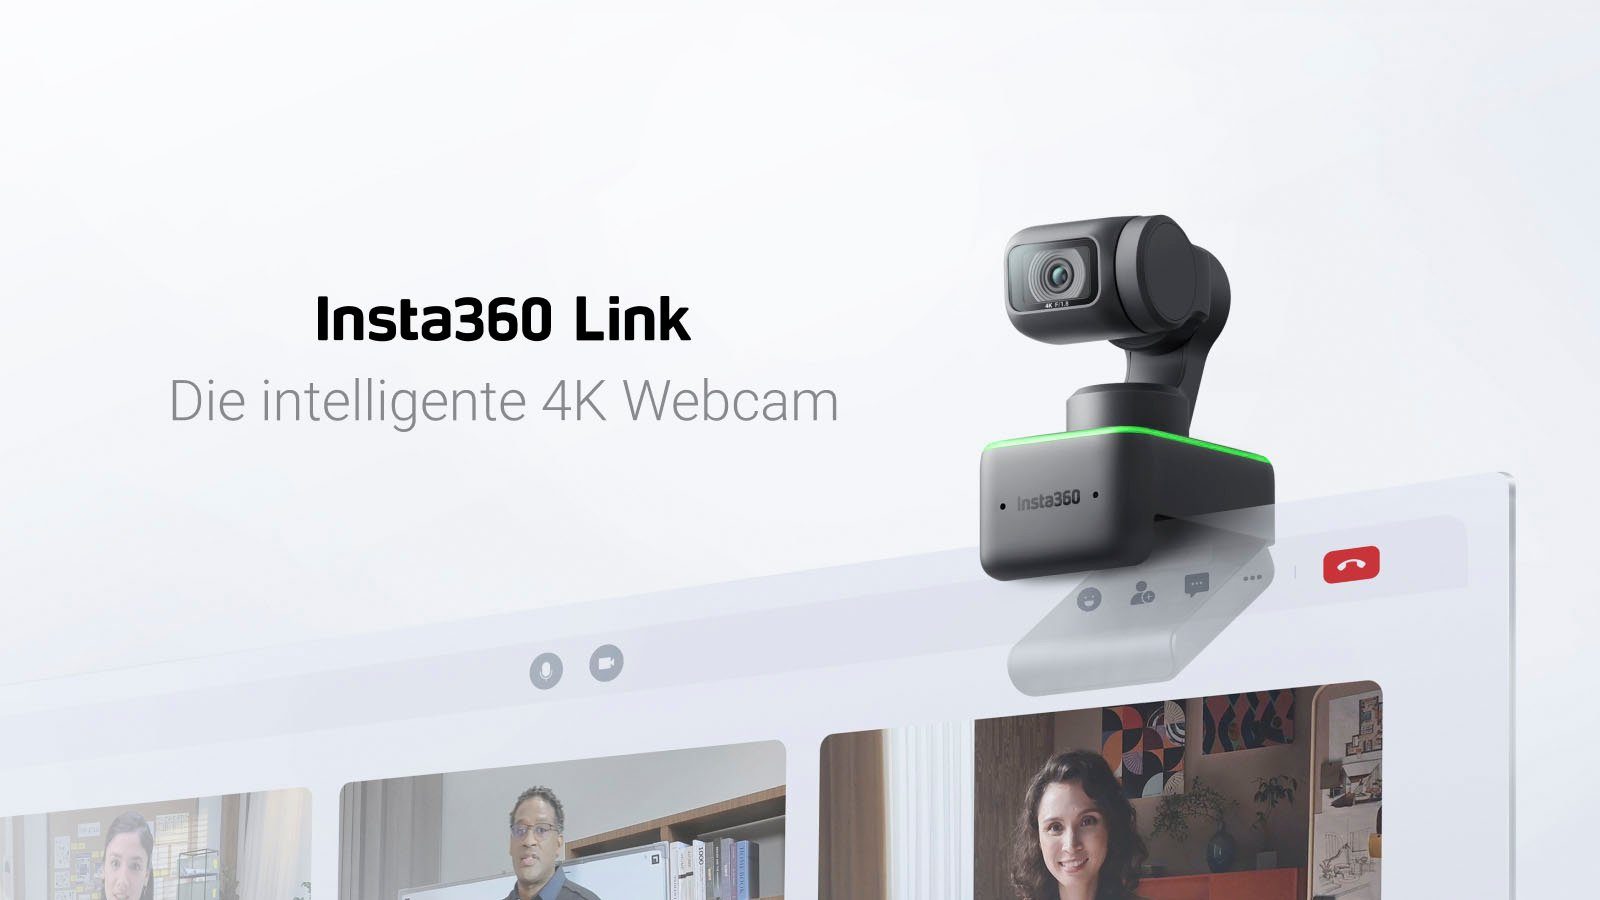 HD) Link Webcam Insta360 Ultra (4K